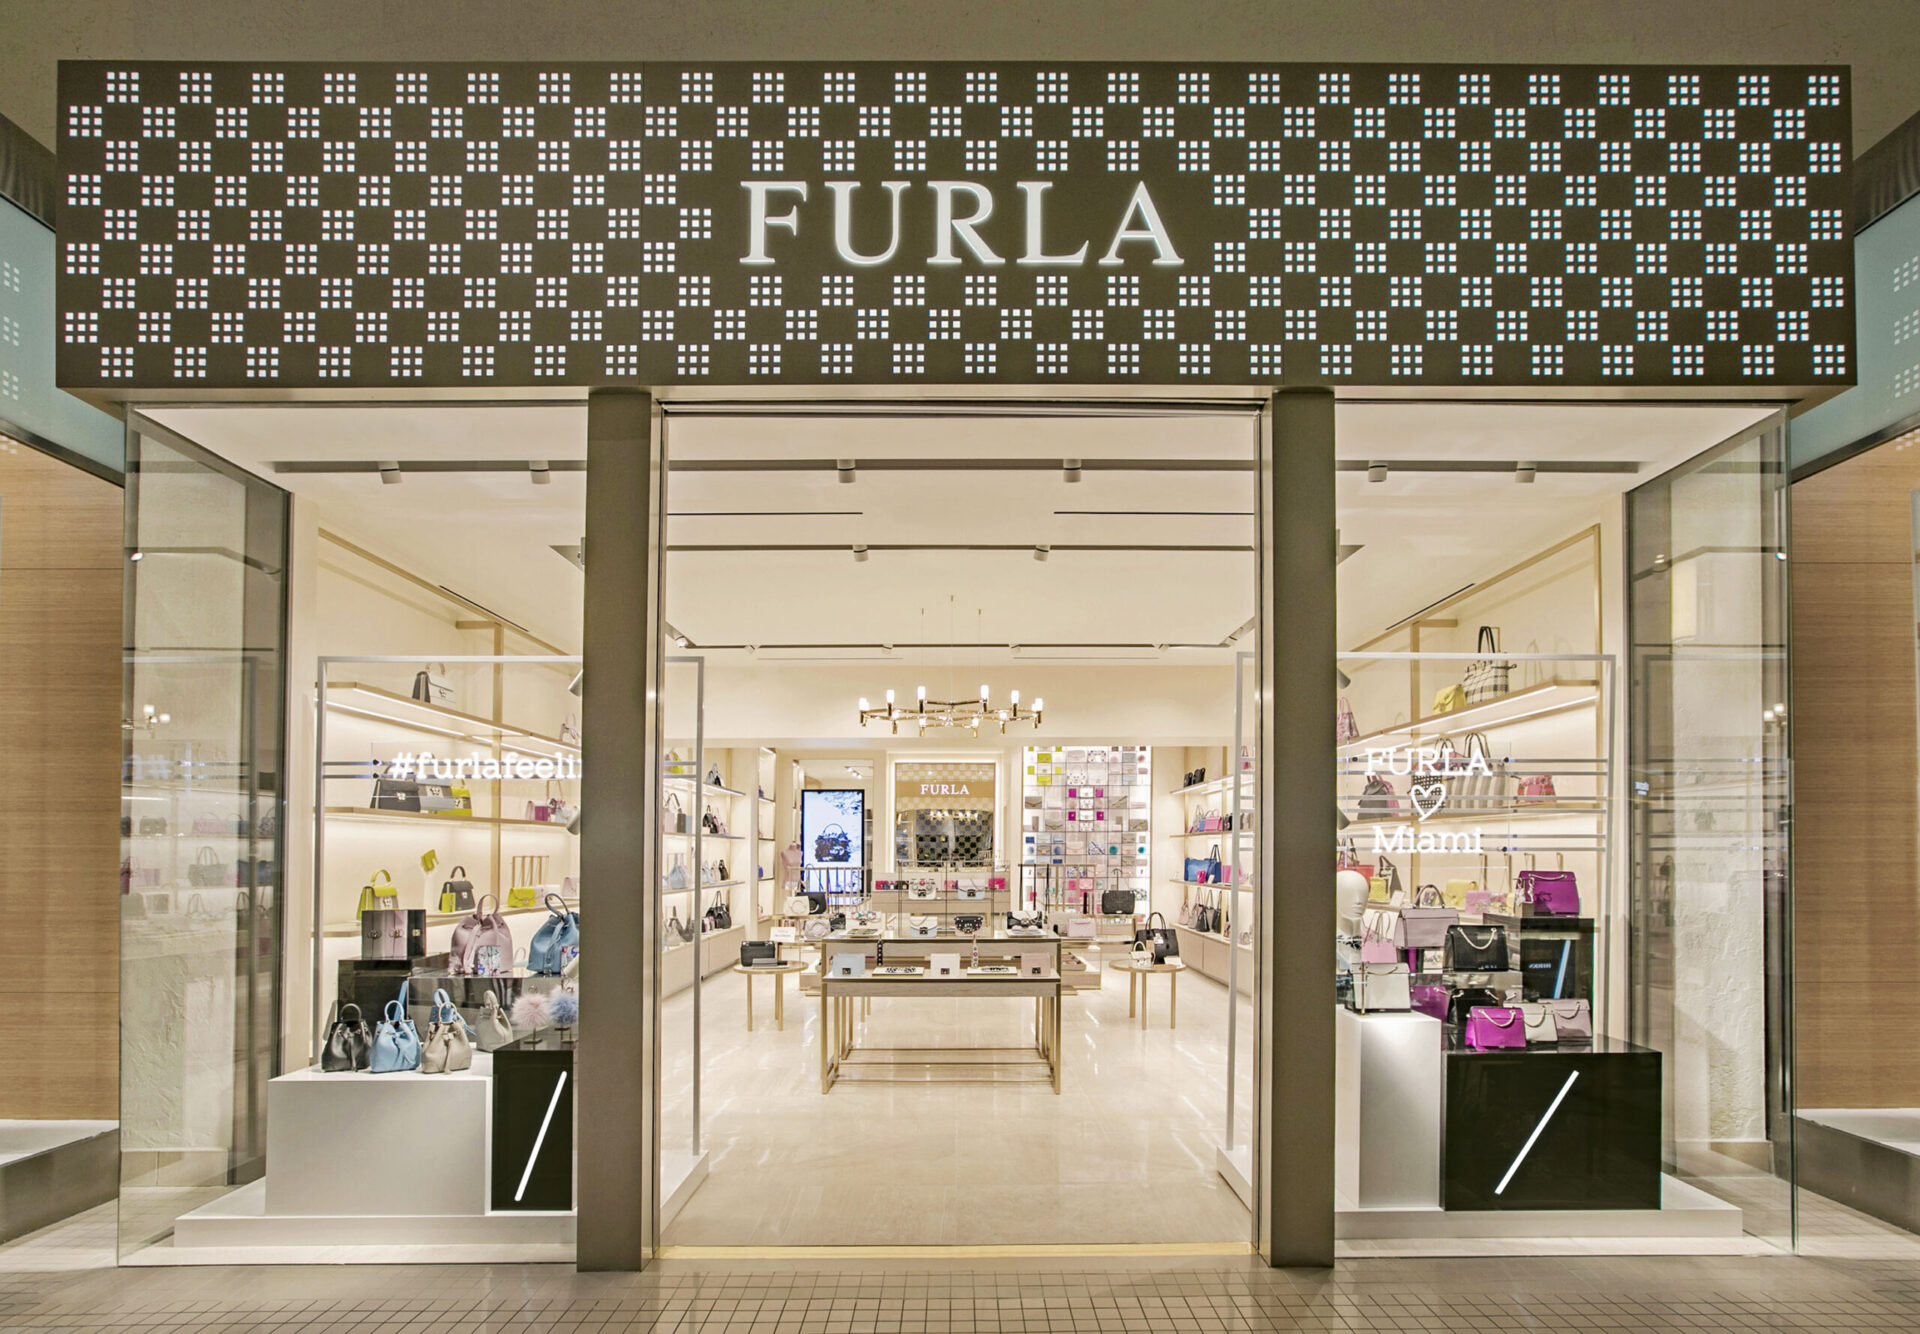 Marketing Strategies and Marketing Mix of Furla